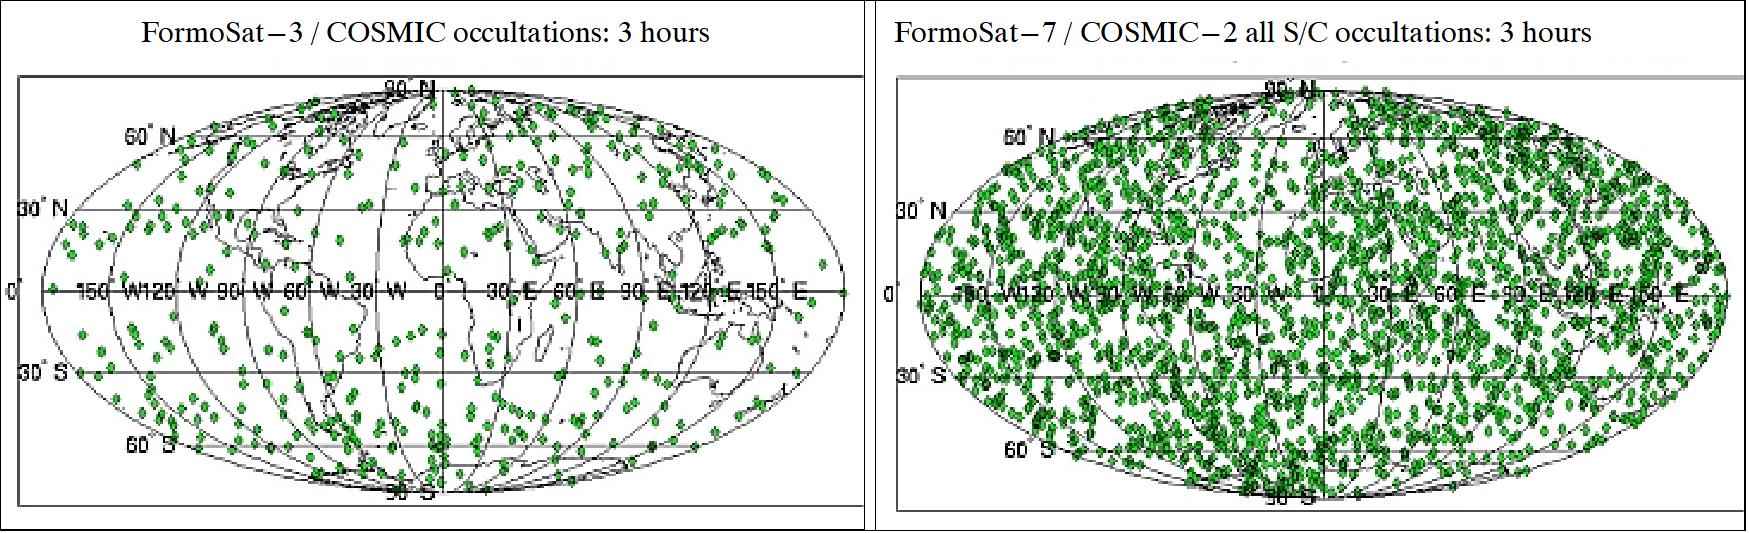 Figure 2: Comparison of sounding distributions for FormoSat-3 / COSMIC and FormoSat-7 / COSMIC-2 (image credit: UCAR)